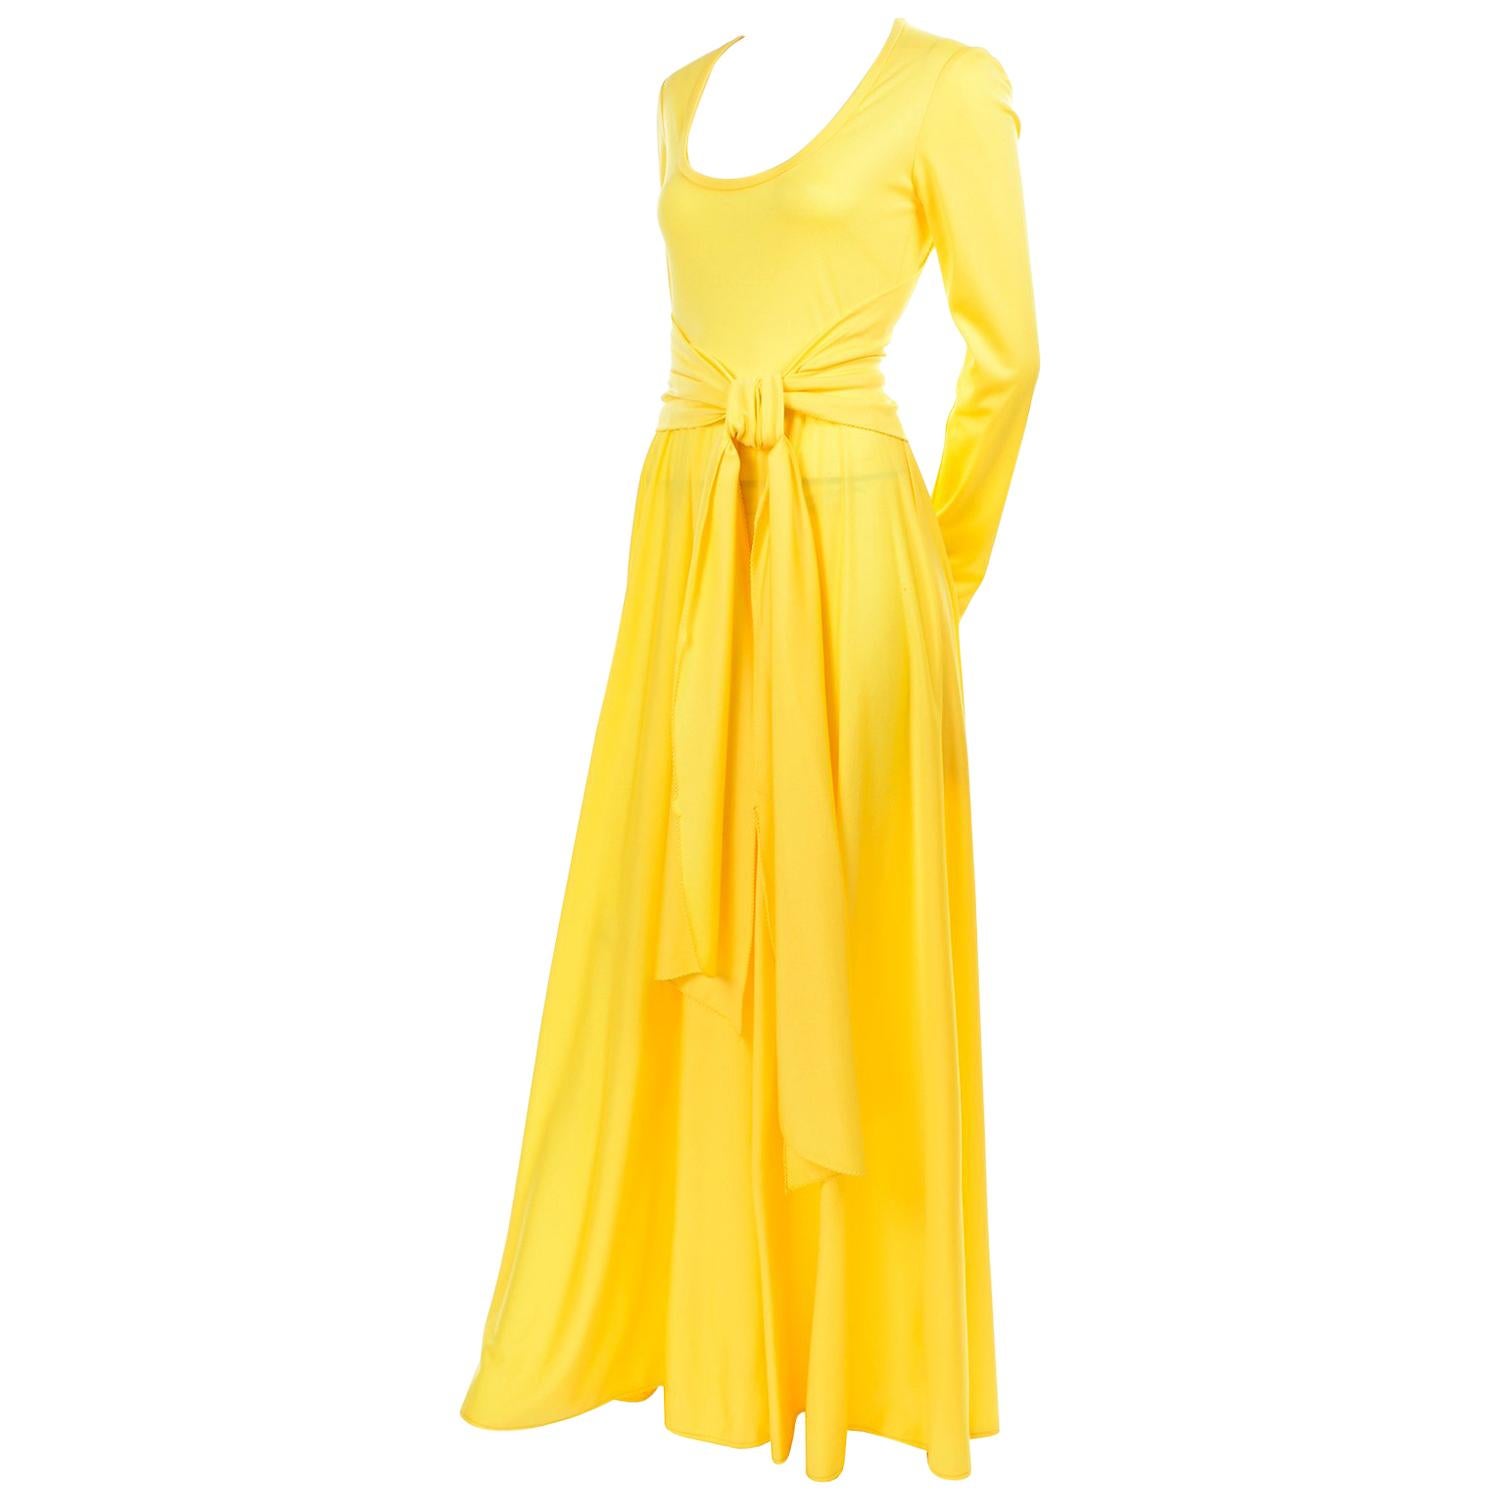 Lillie Rubin - Robe vintage en jersey jaune avec ceinture, collection 700